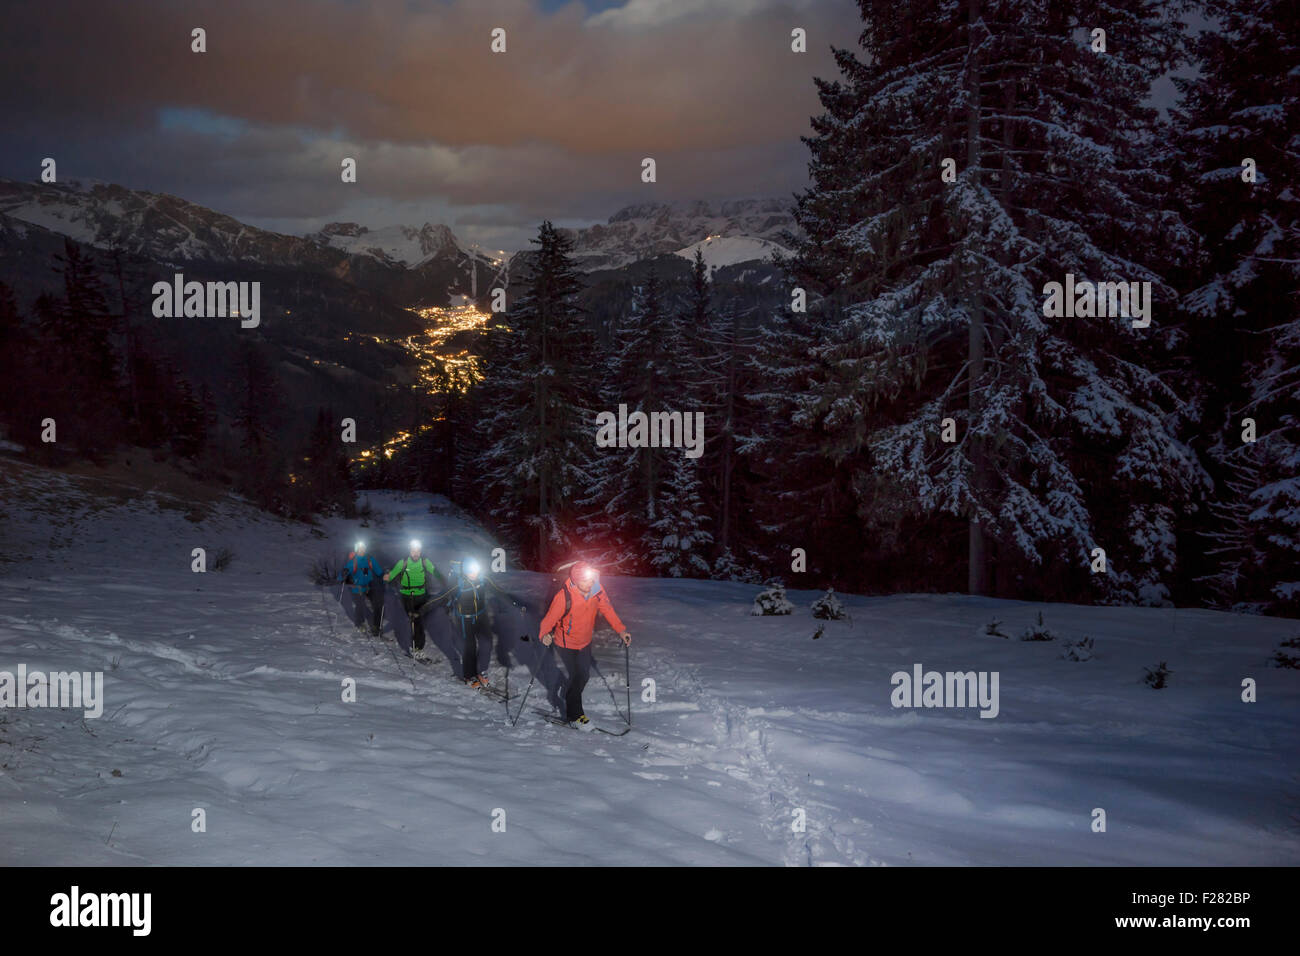 Ski mountaineers climbing on snowy mountain with head torches, Val Gardena, Trentino-Alto Adige, Italy Stock Photo